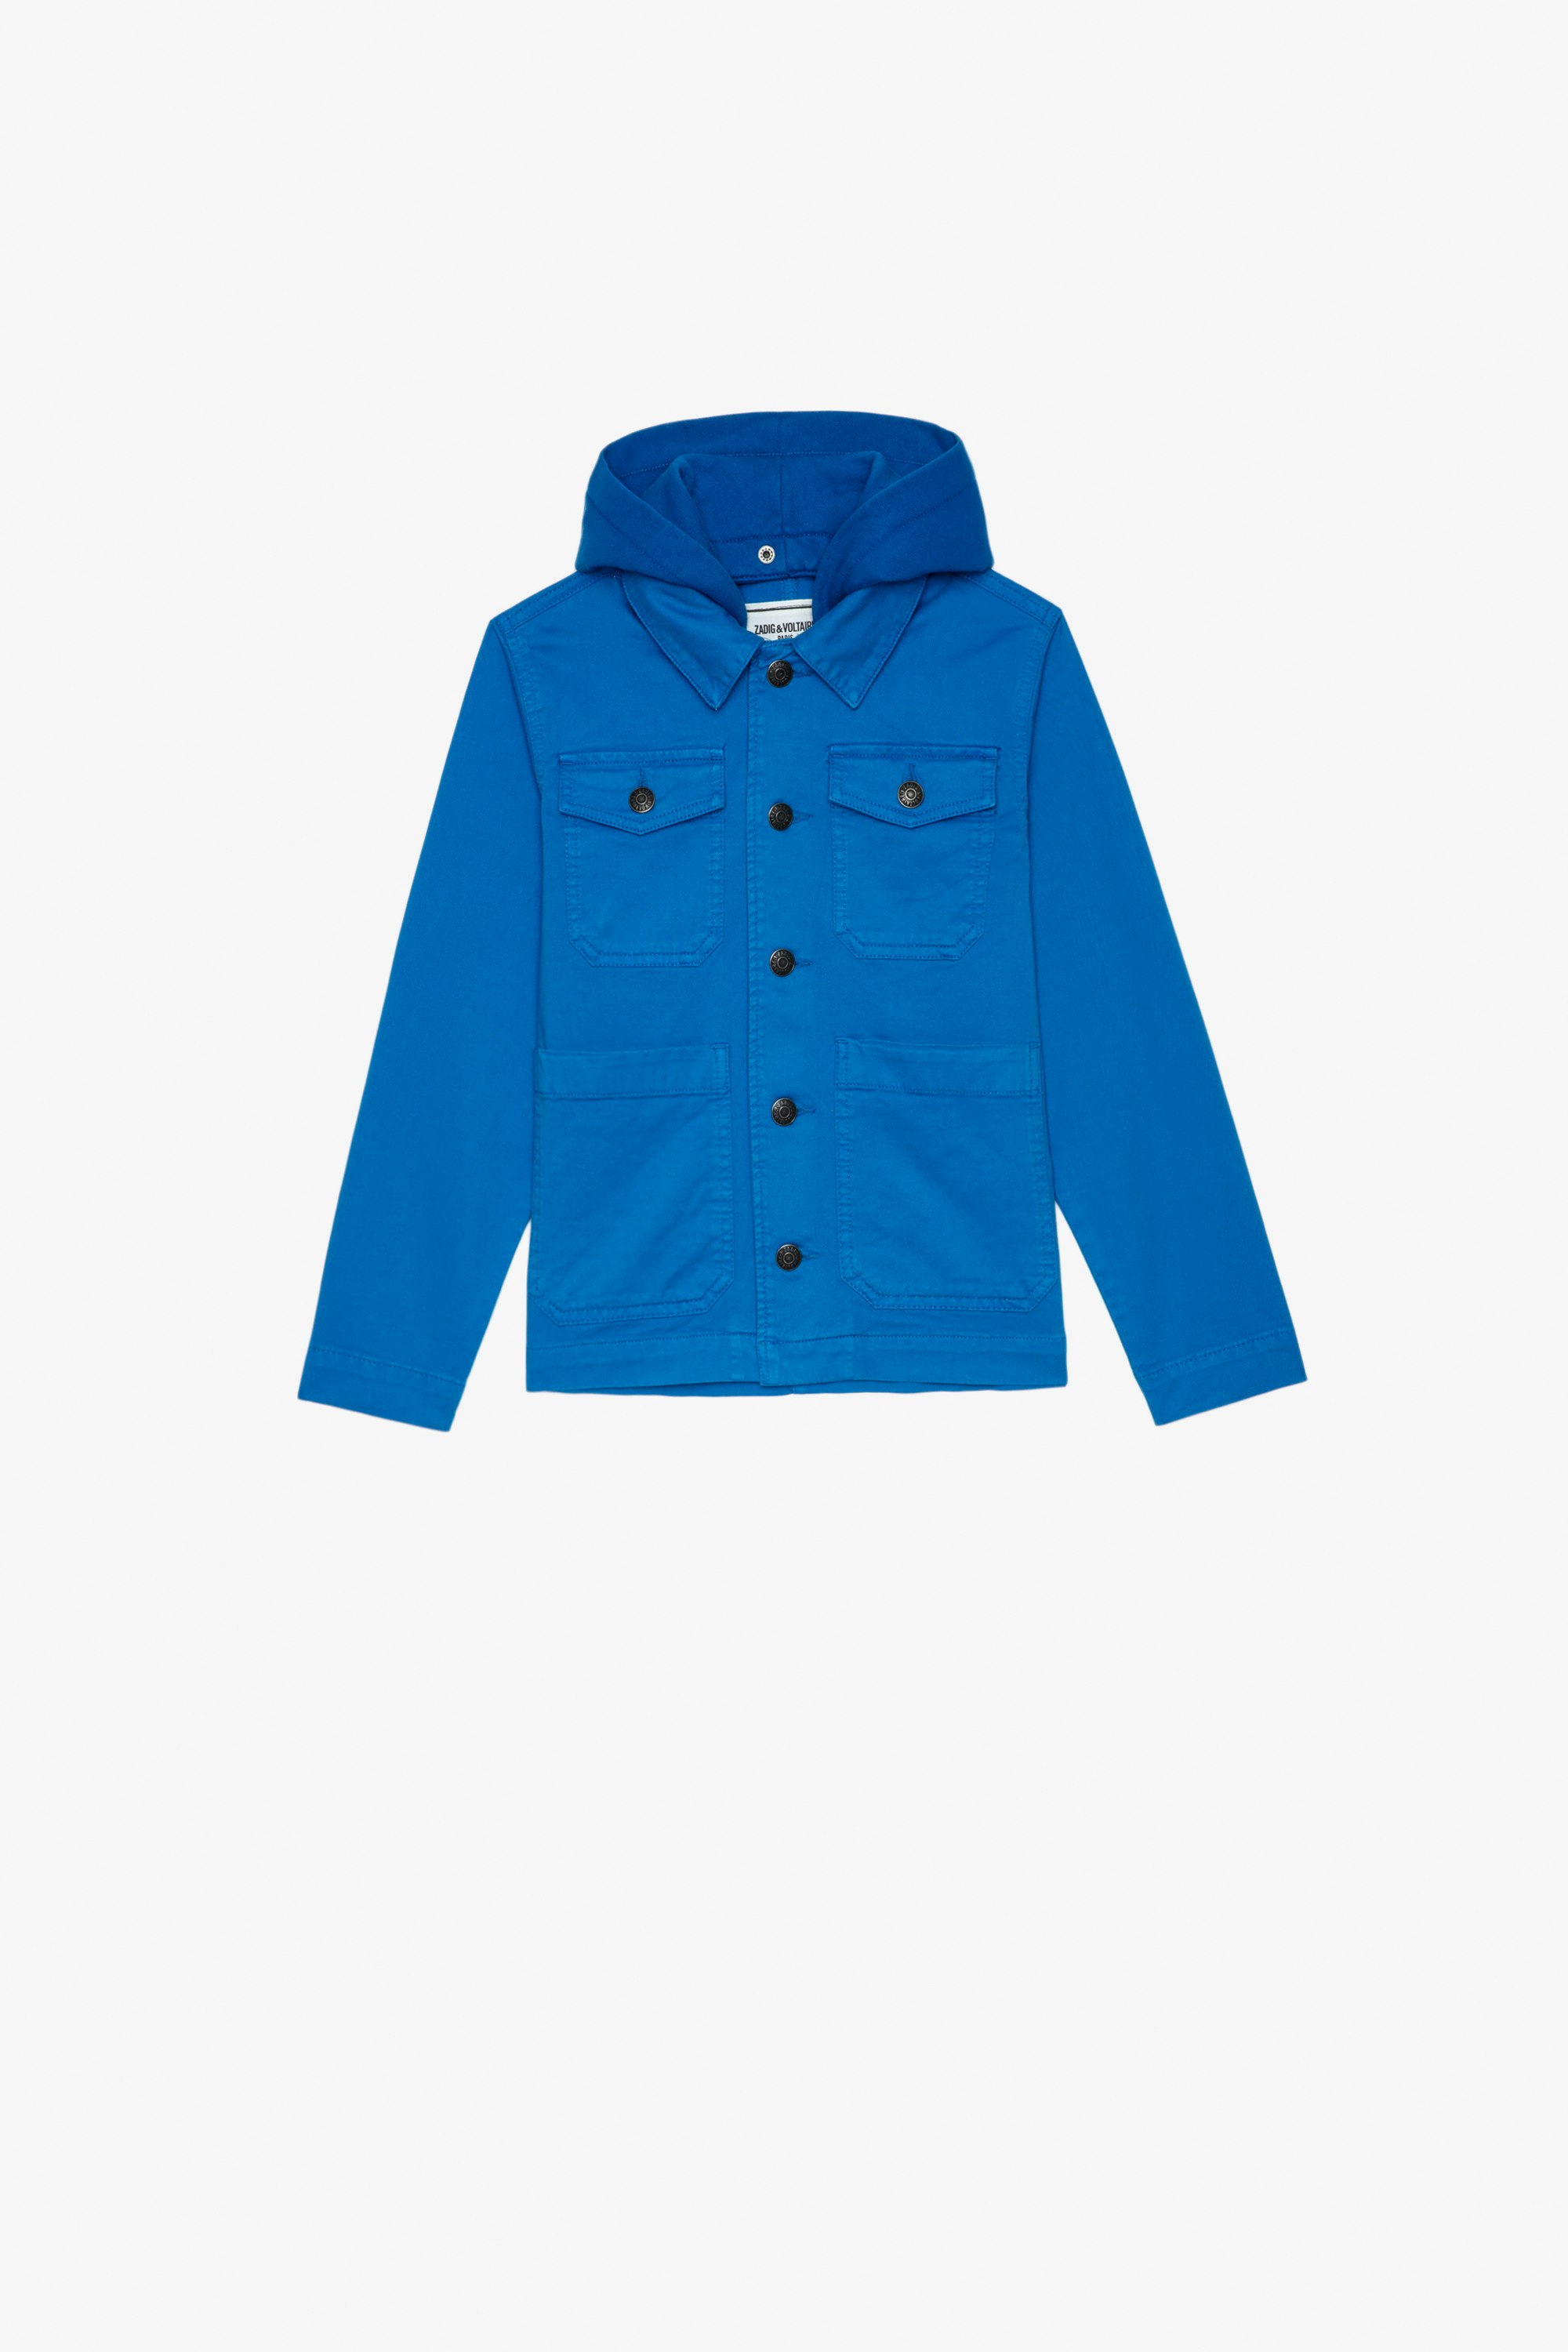 Bertie アンファン ジャケット ブルー サージコットンジャケット 取り外し可能フード、背中に 「Art lover」の文字入り キッズ